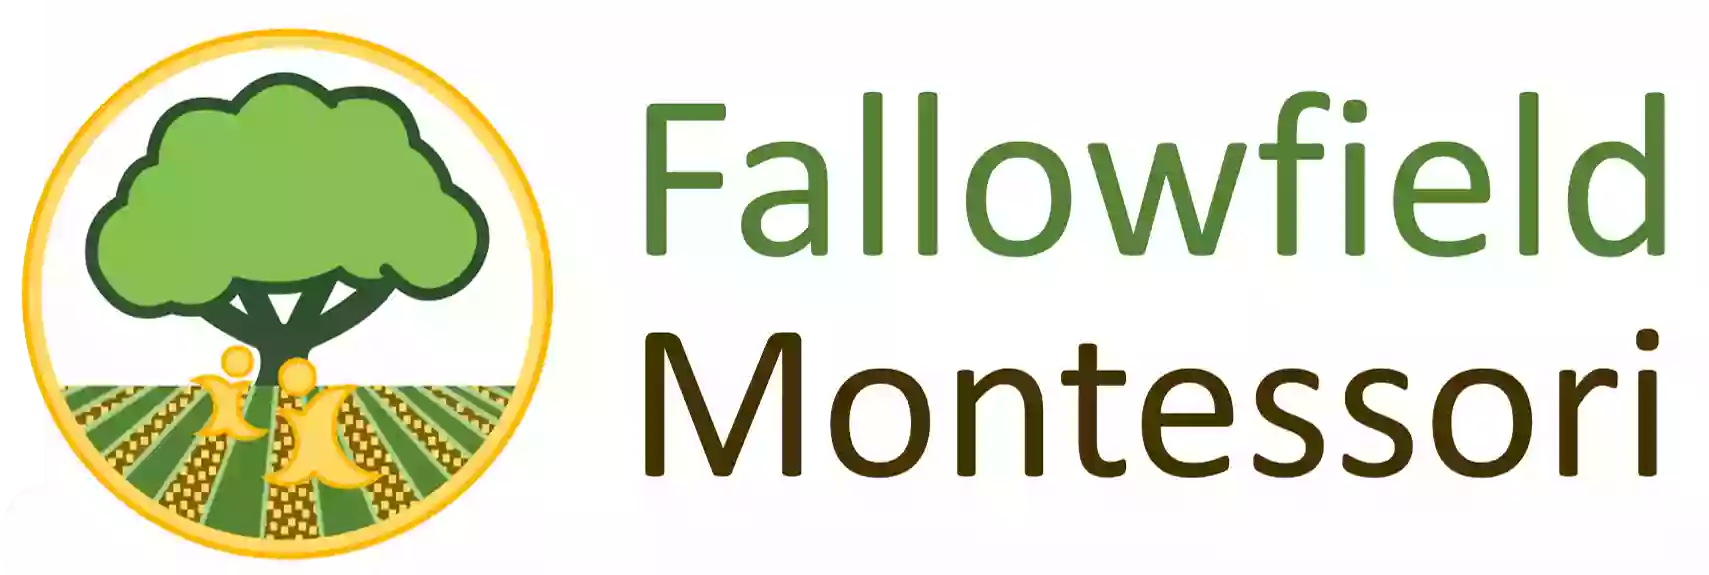 Fallowfield Montessori Academy